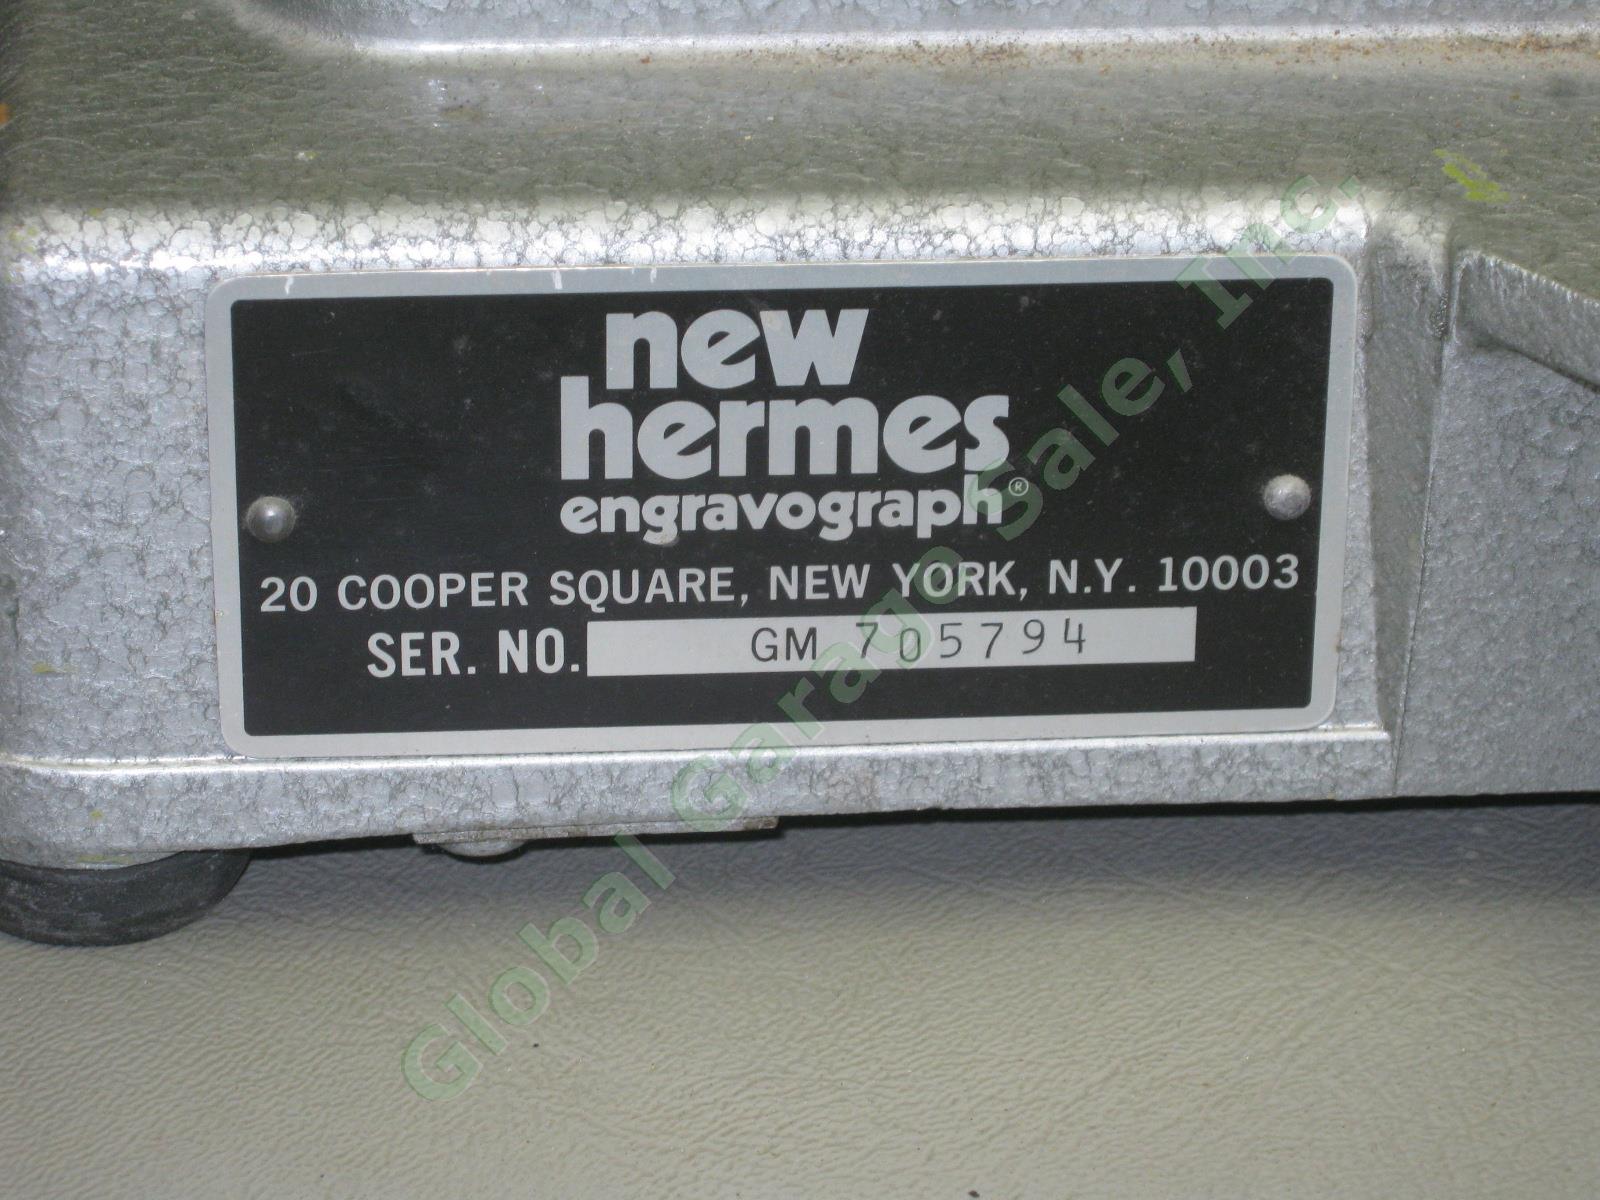 Vtg New Hermes Engravograph Portable Engraving Machine Serial GM 705794 EM-10101 2